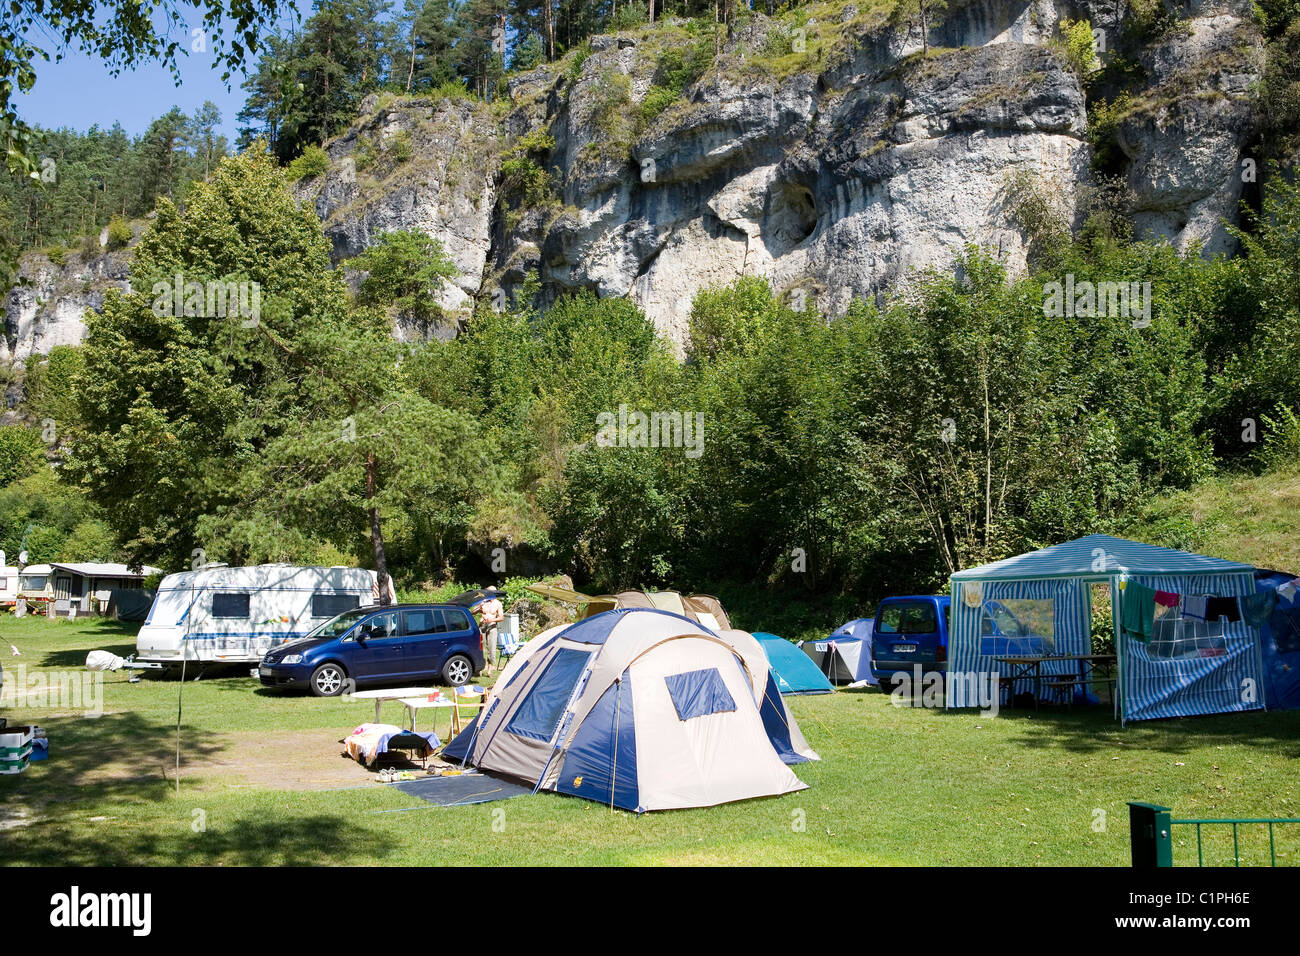 Germany, Bavaria, Little Switzerland, Pottenstein, tents in campsite Stock Photo